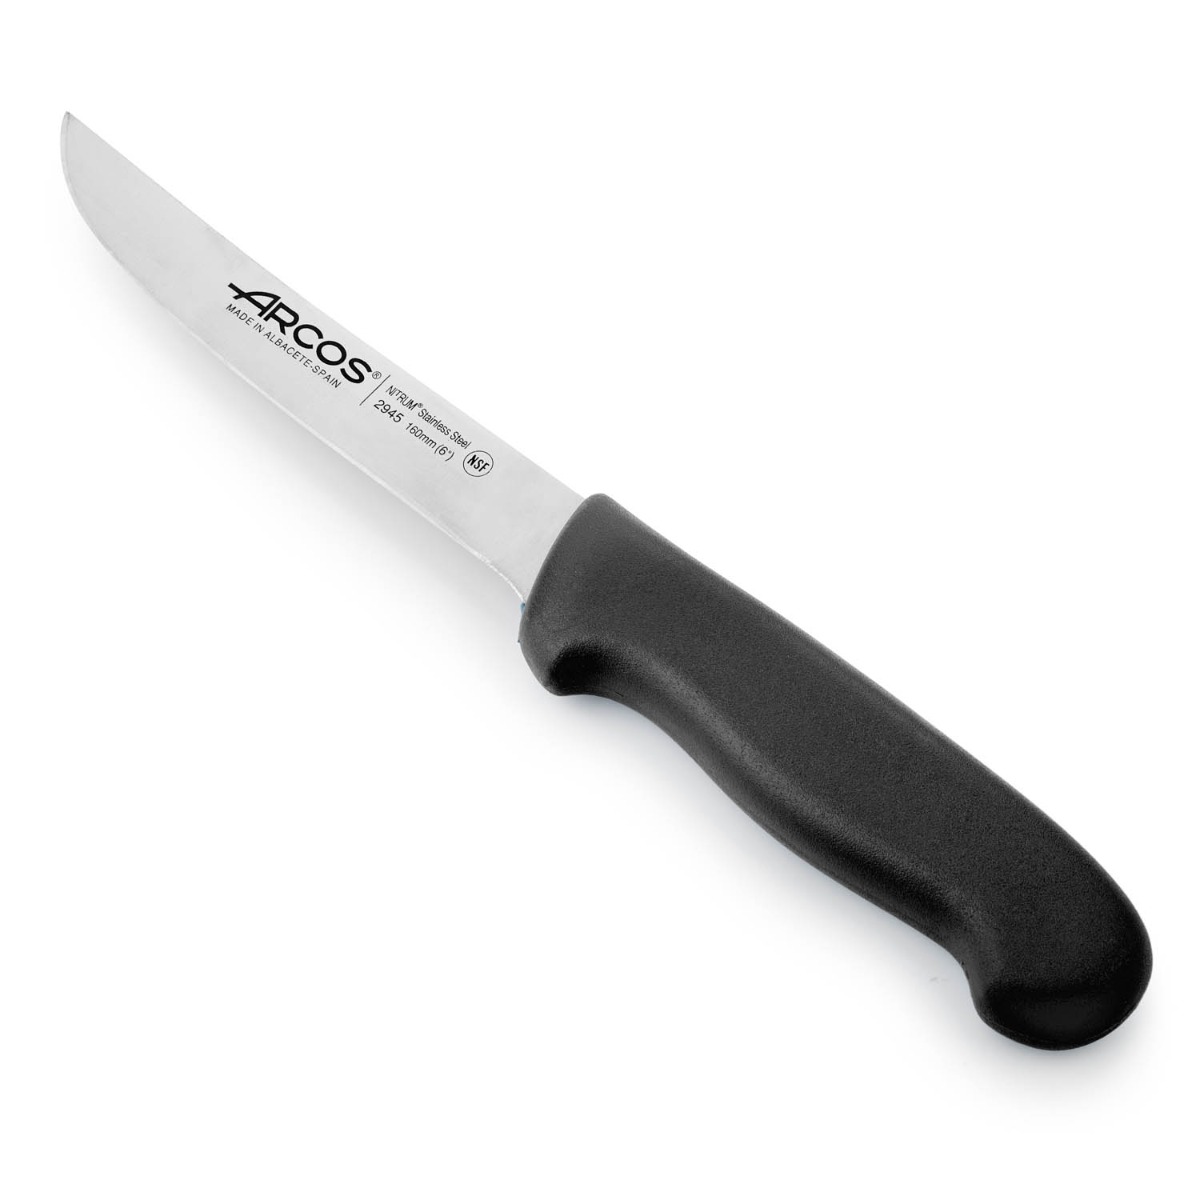 Arcos - Arcos Serie 2900 - Cuchillo Deshuesador - Hoja de Acero Inoxidable NITRUM de 160 mm - Mango inyectado en Polipropileno Color negro